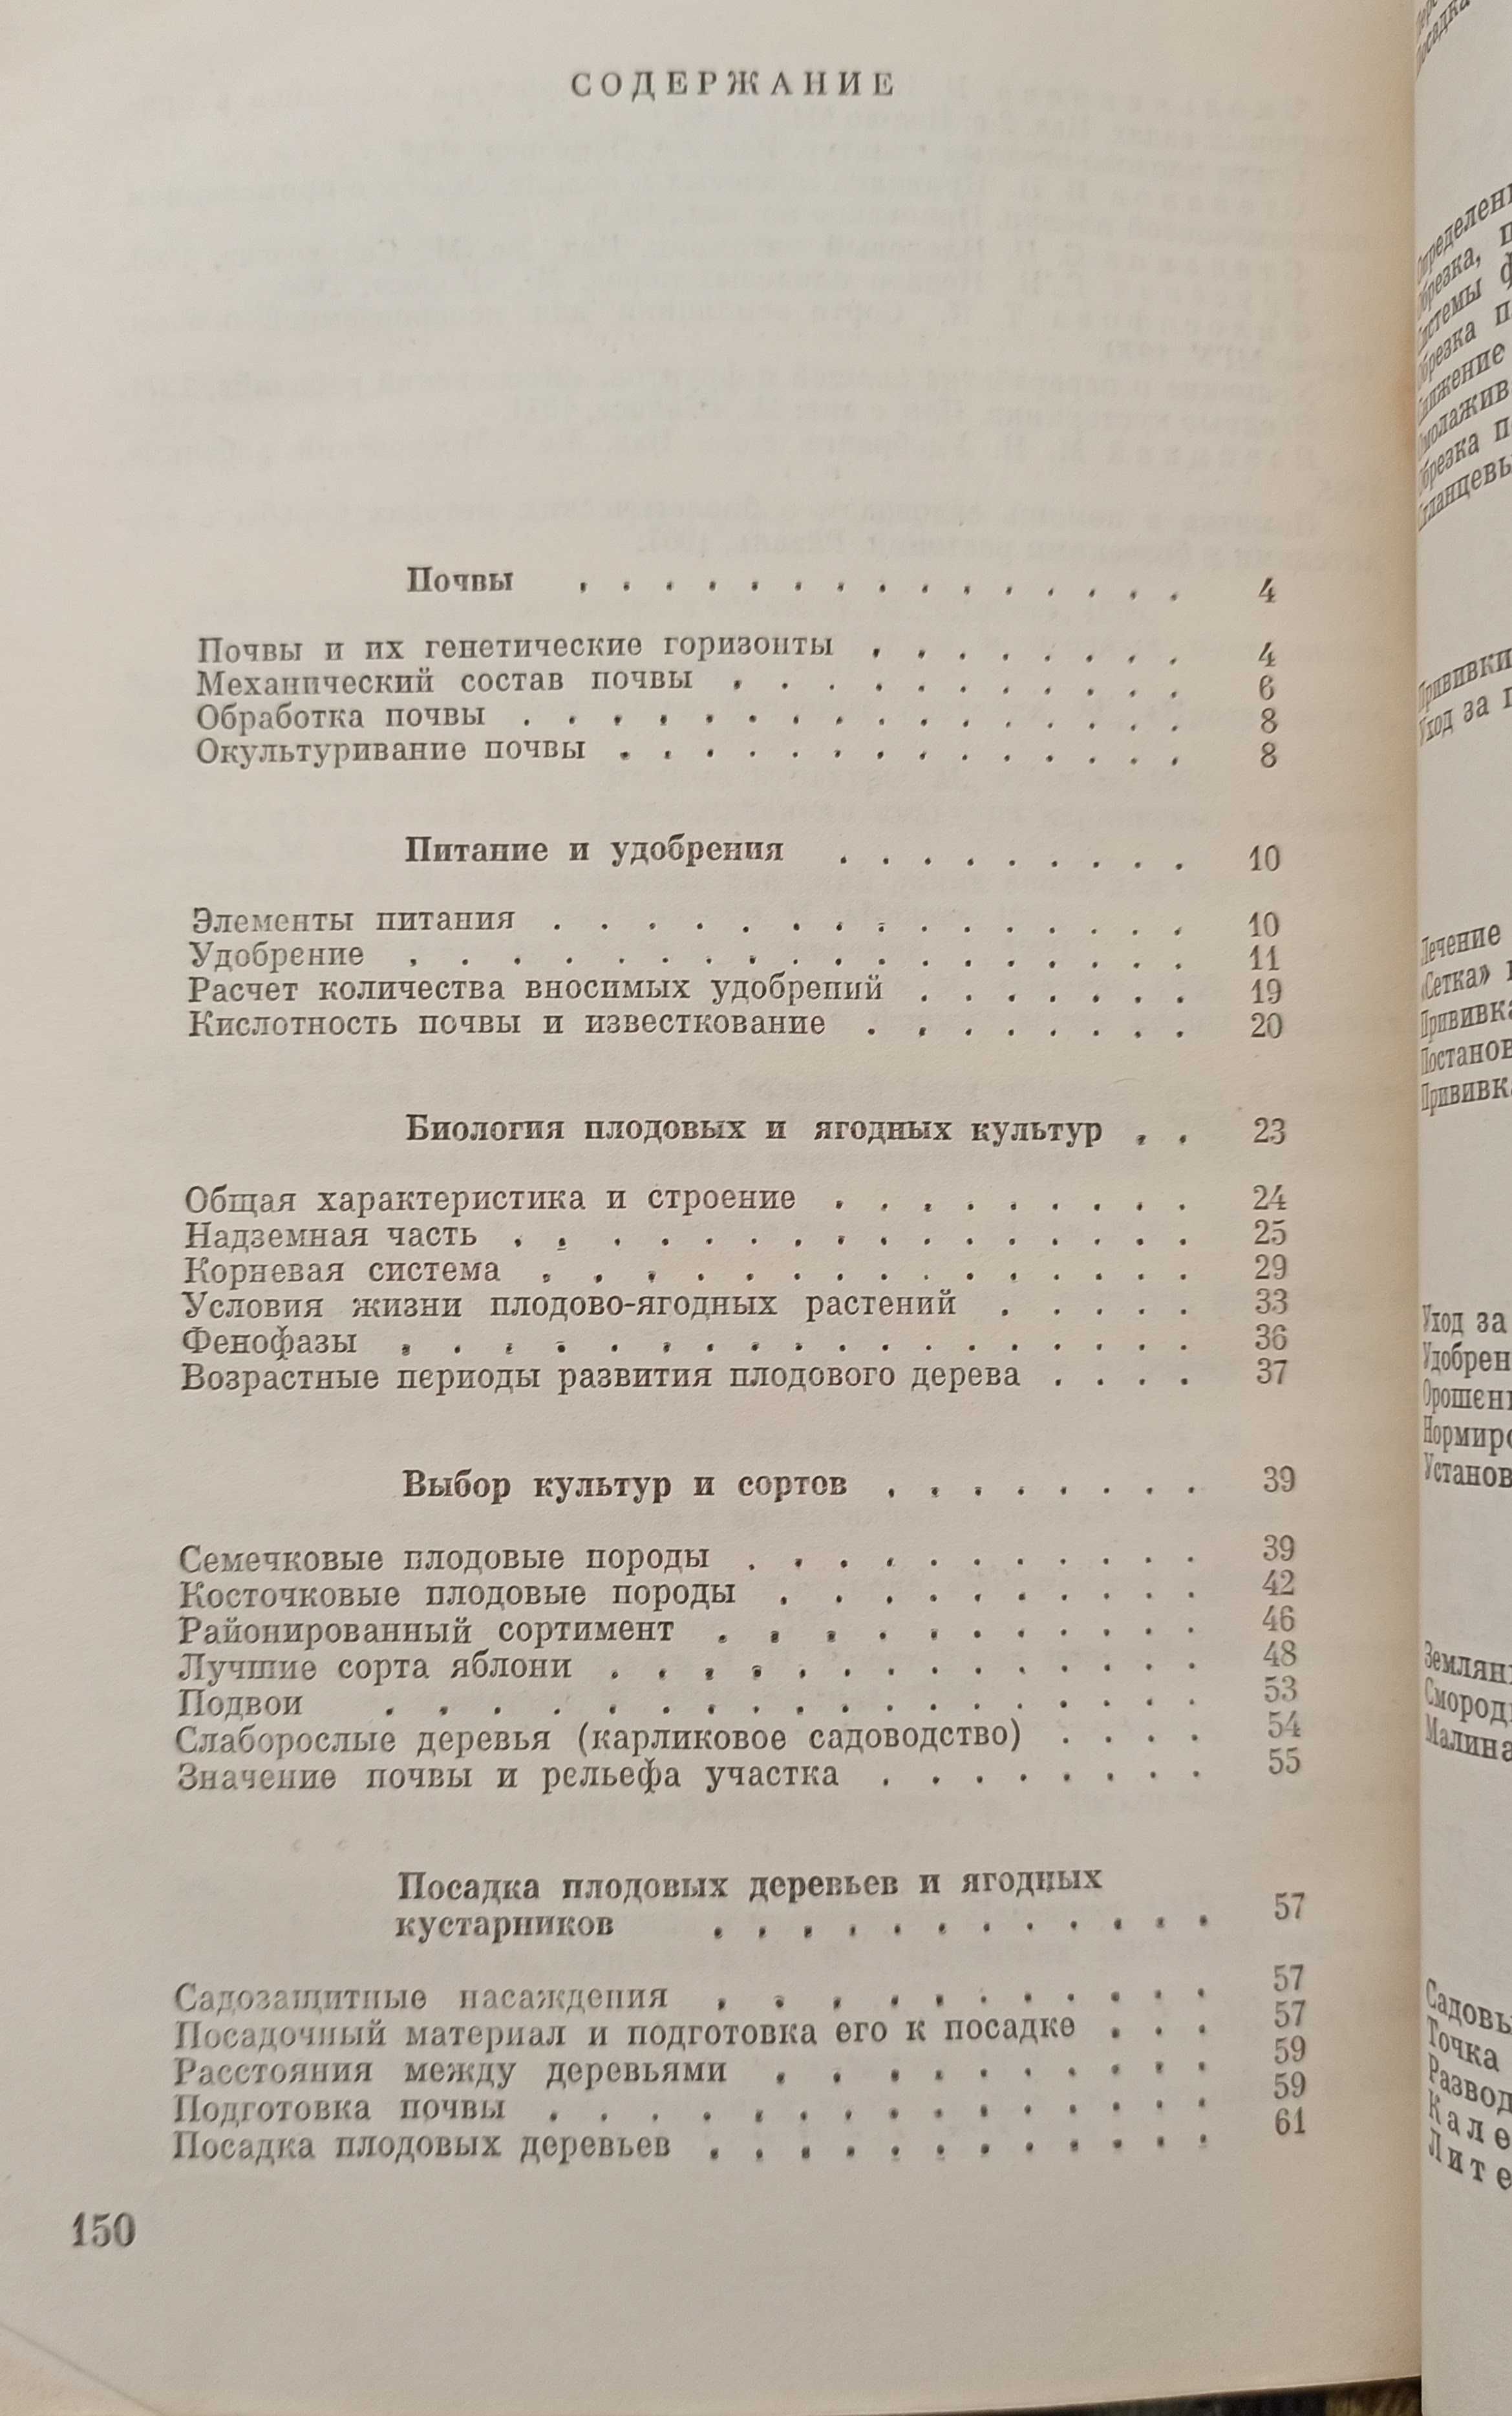 Книга Е. В. Колесников "Советы садоводам" 1974 рік видання